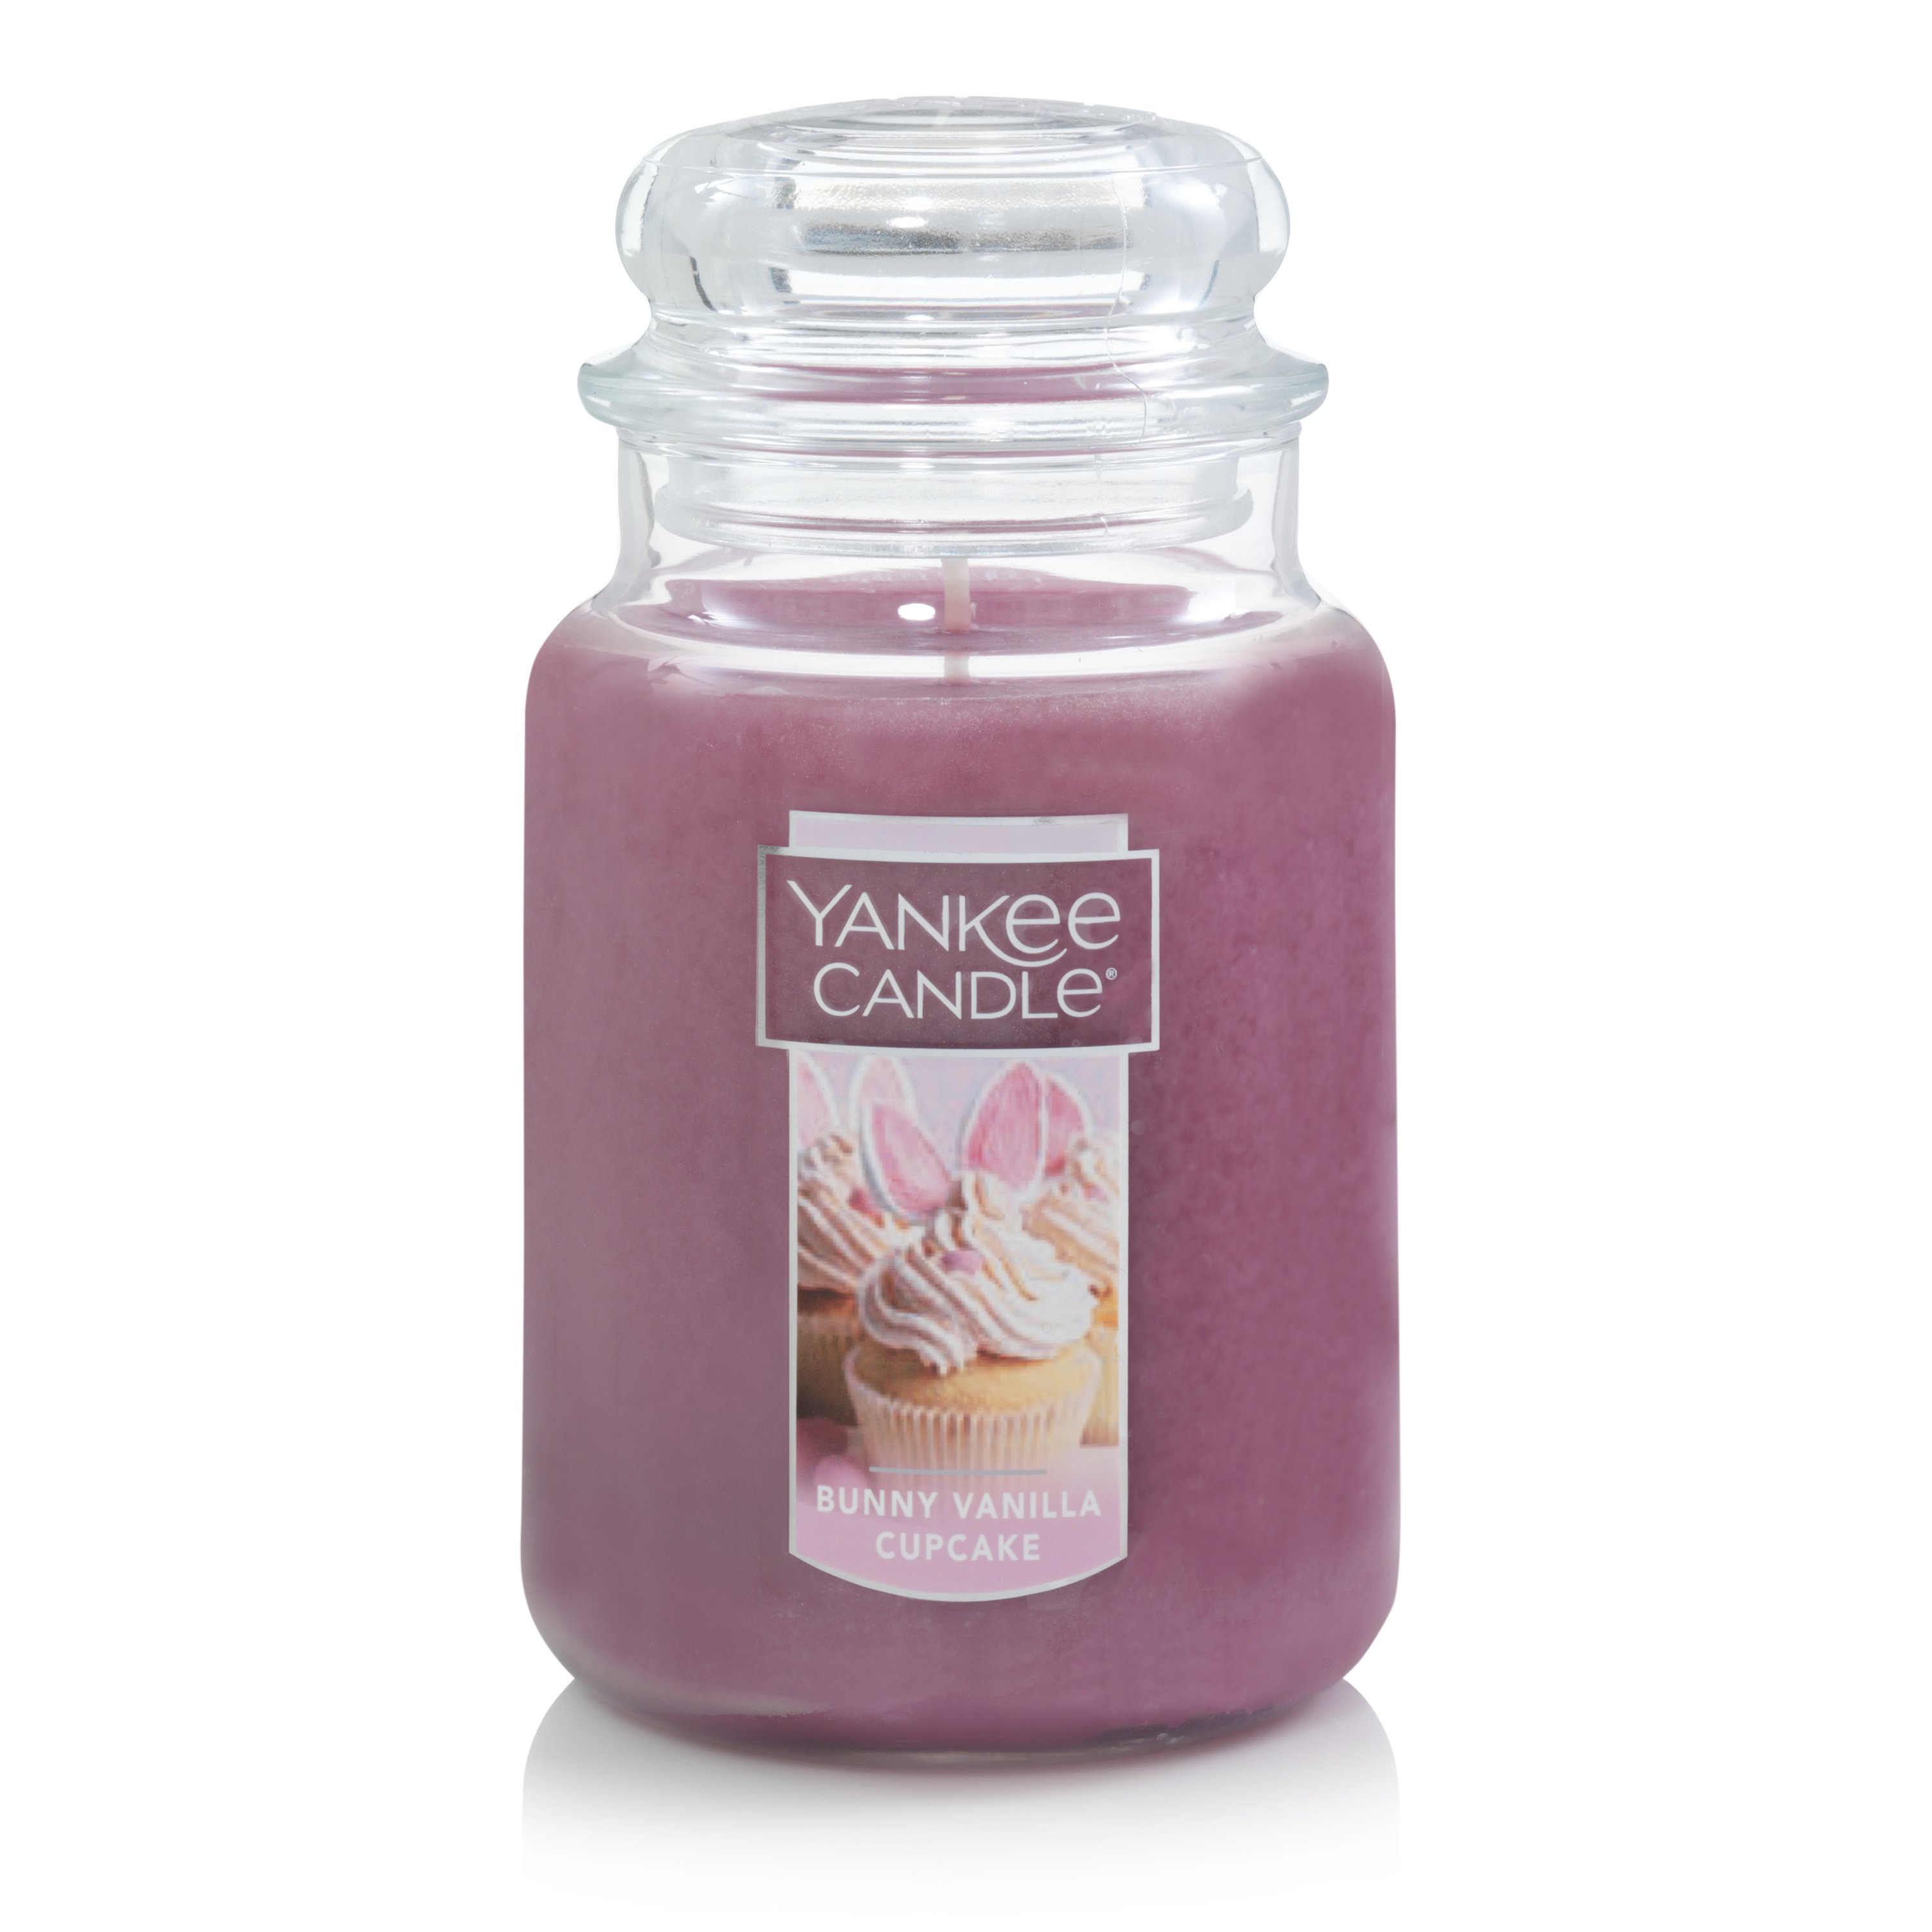 Yankee Candle Vanilla Cupcake candela profumata